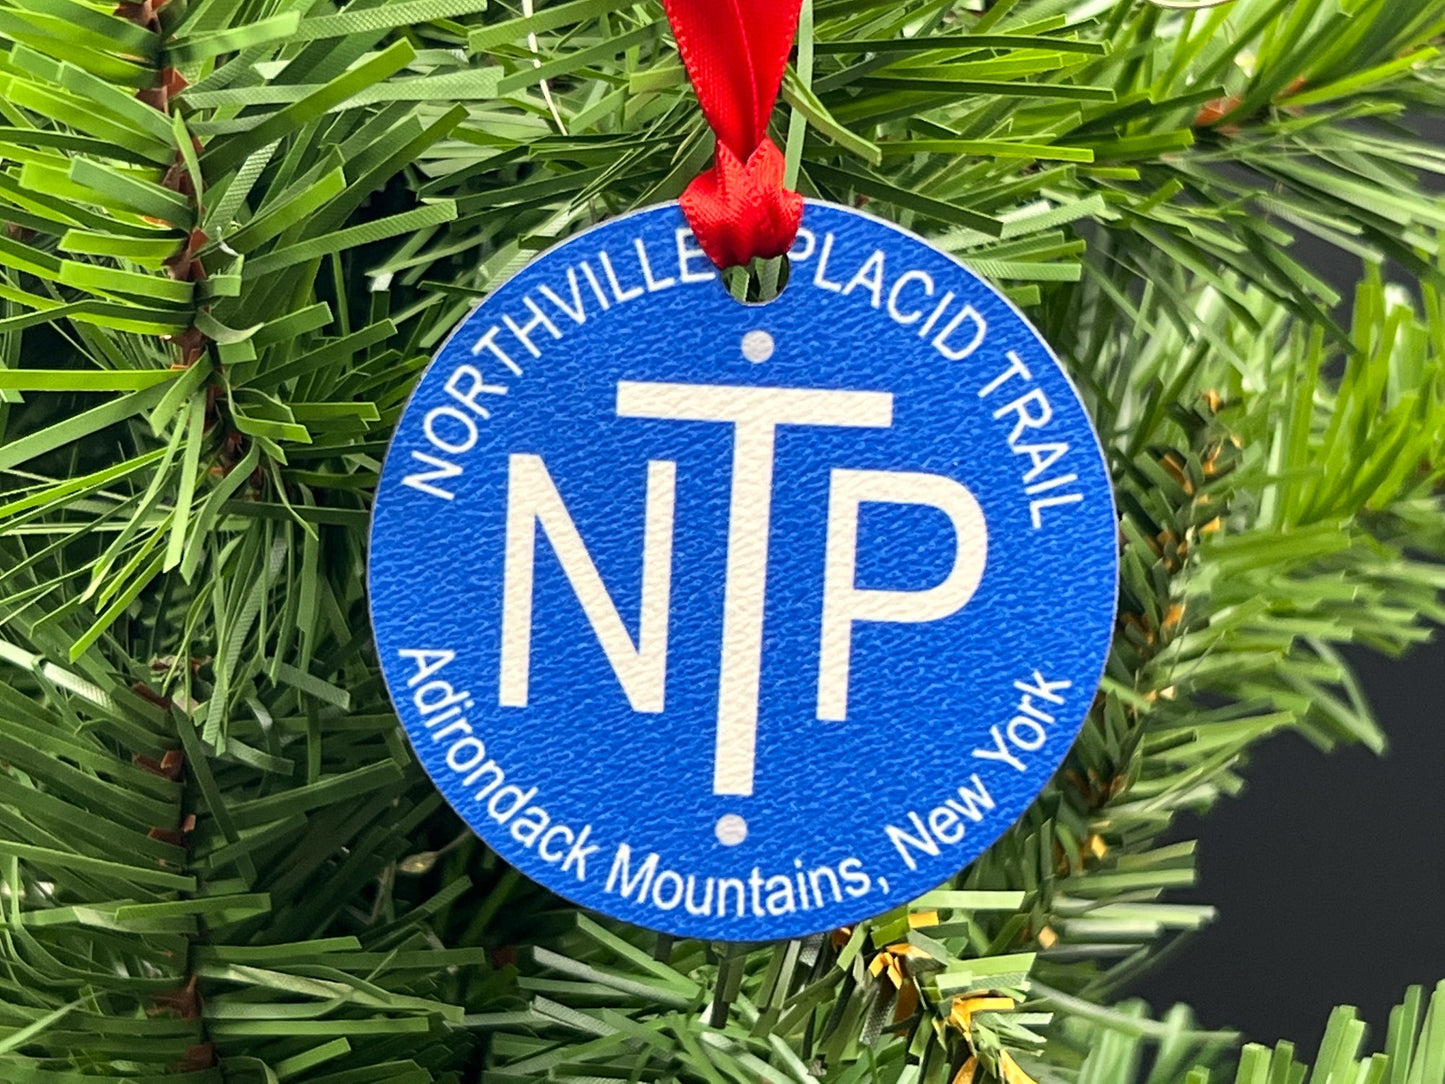 Northville-Placid Trail Marker Hardboard Ornament